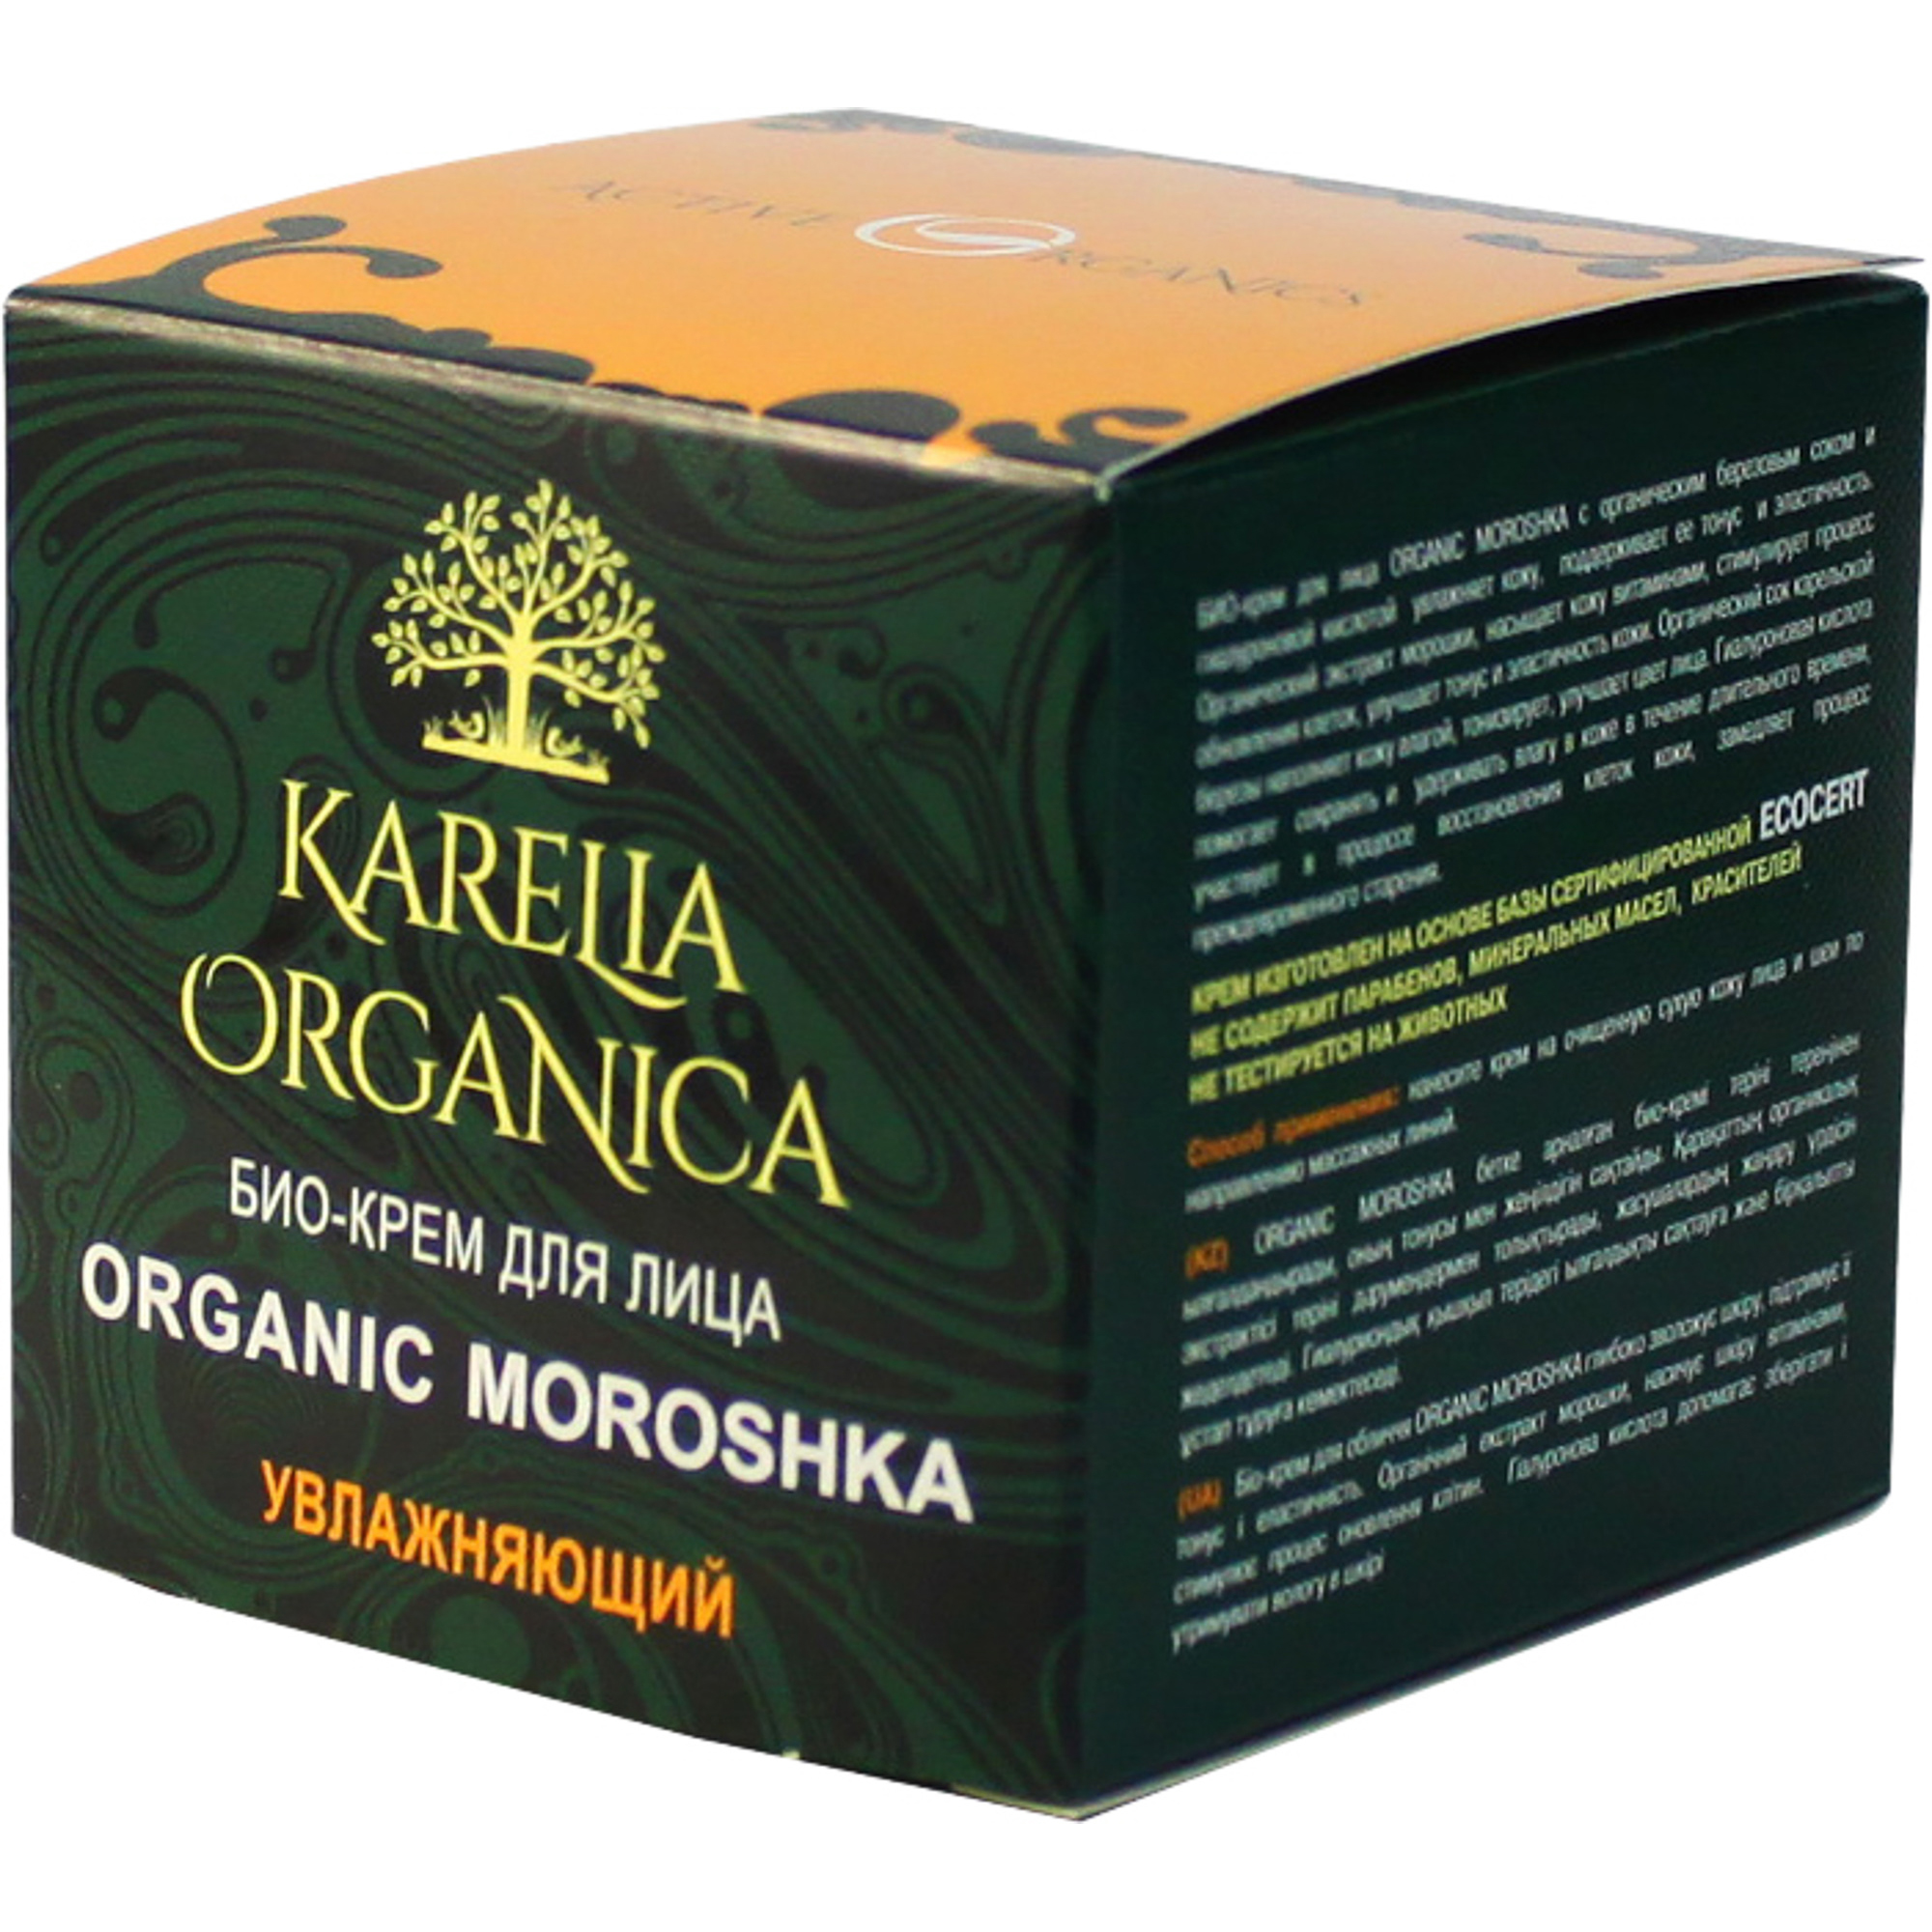 Крем для лица Фратти НВ Karelia Organica Organic Moroshka увлажняющий 50 мл